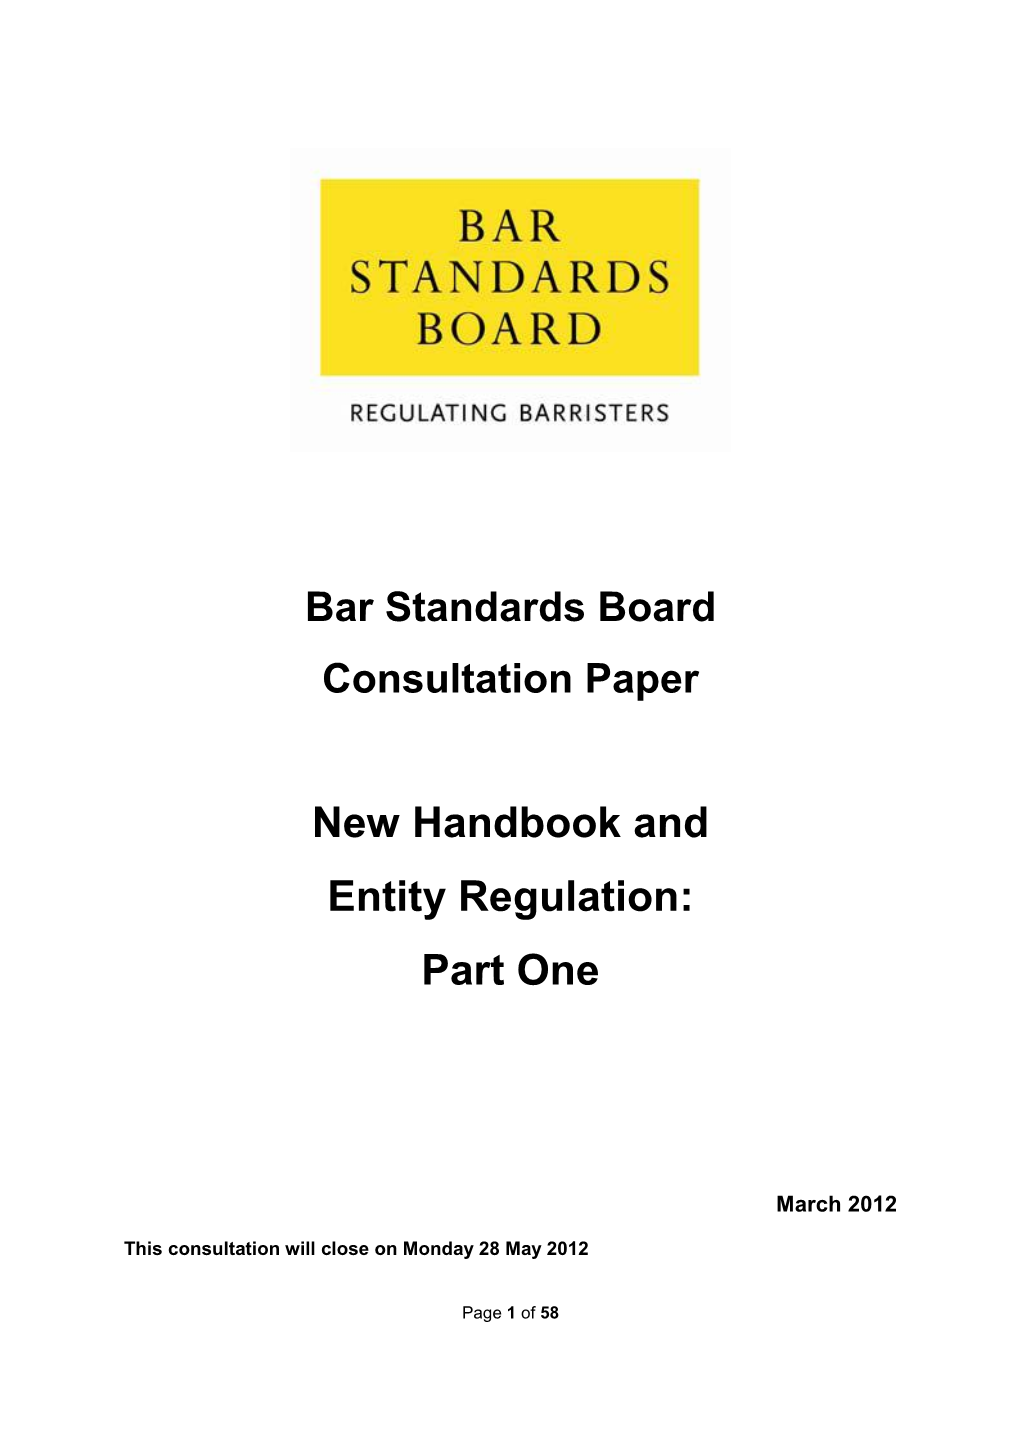 New Handbook and Entity Regulation: Part